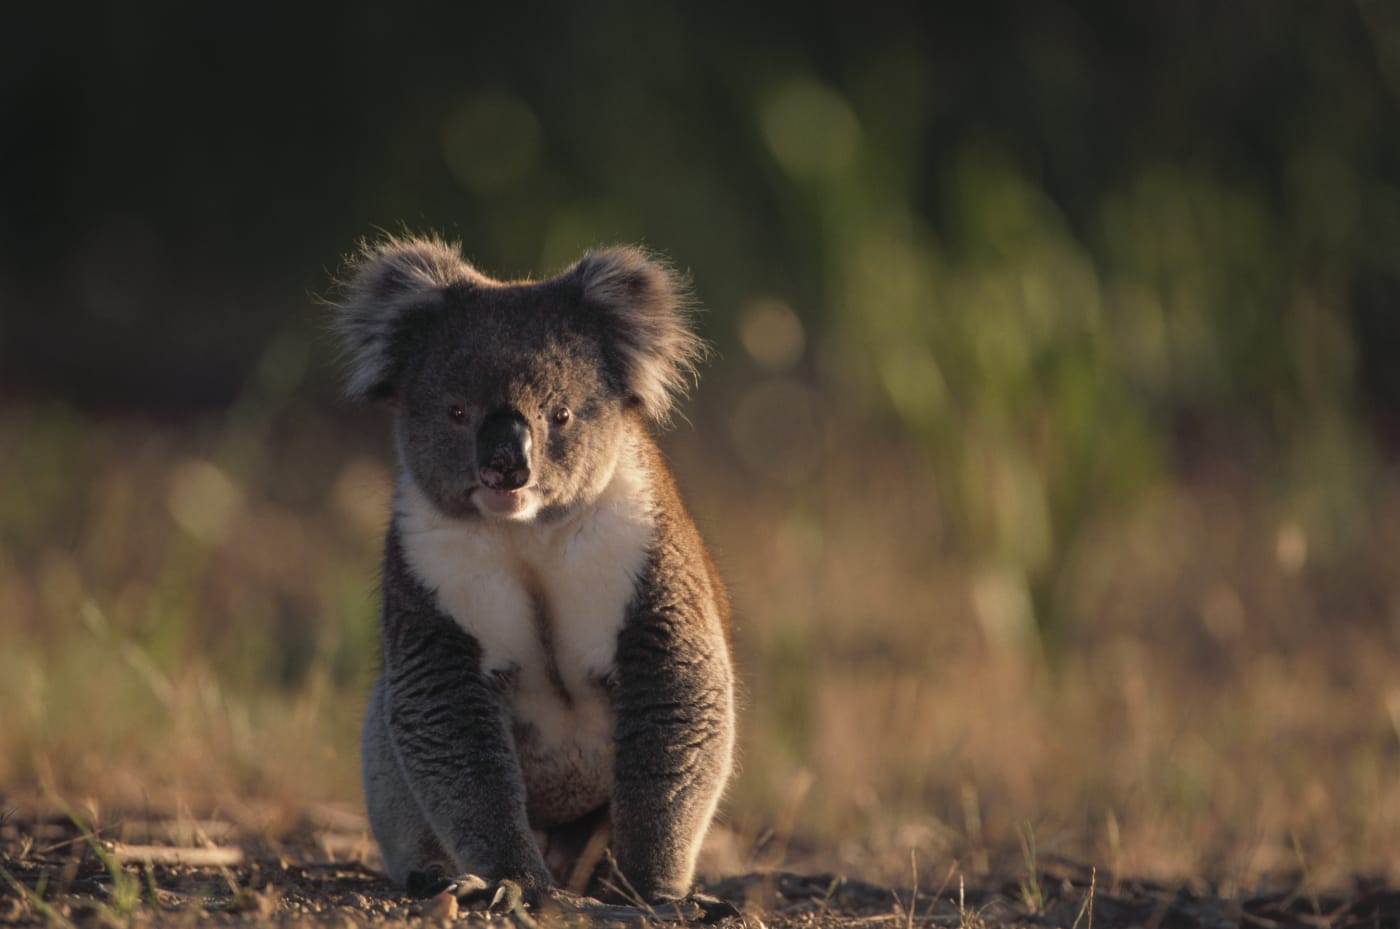 Wild koala (Phascolarctos cinereus) sitting on ground, Kangaroo Island, South Australia.